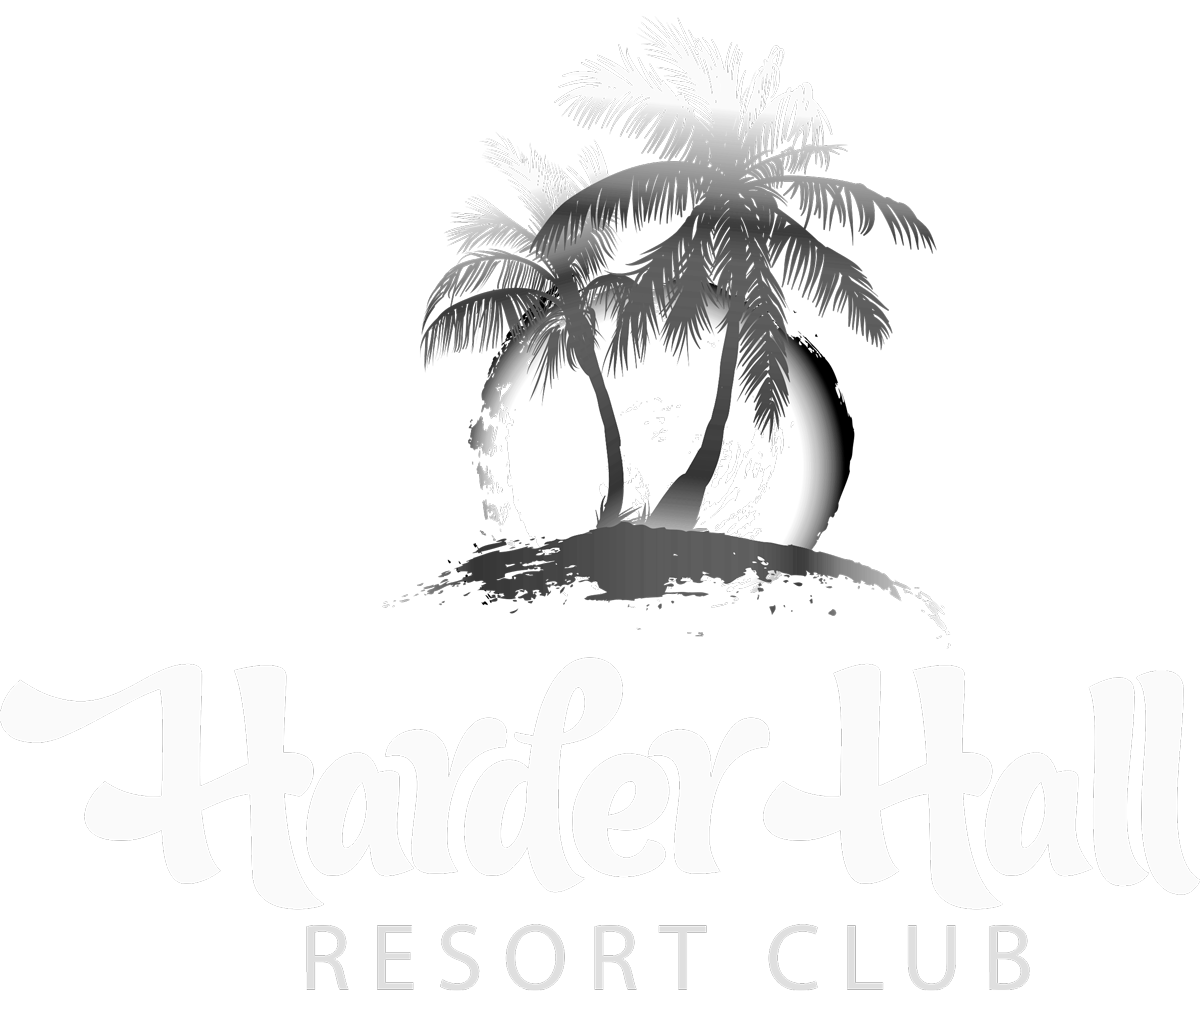 Harder Hall Resort Club logo